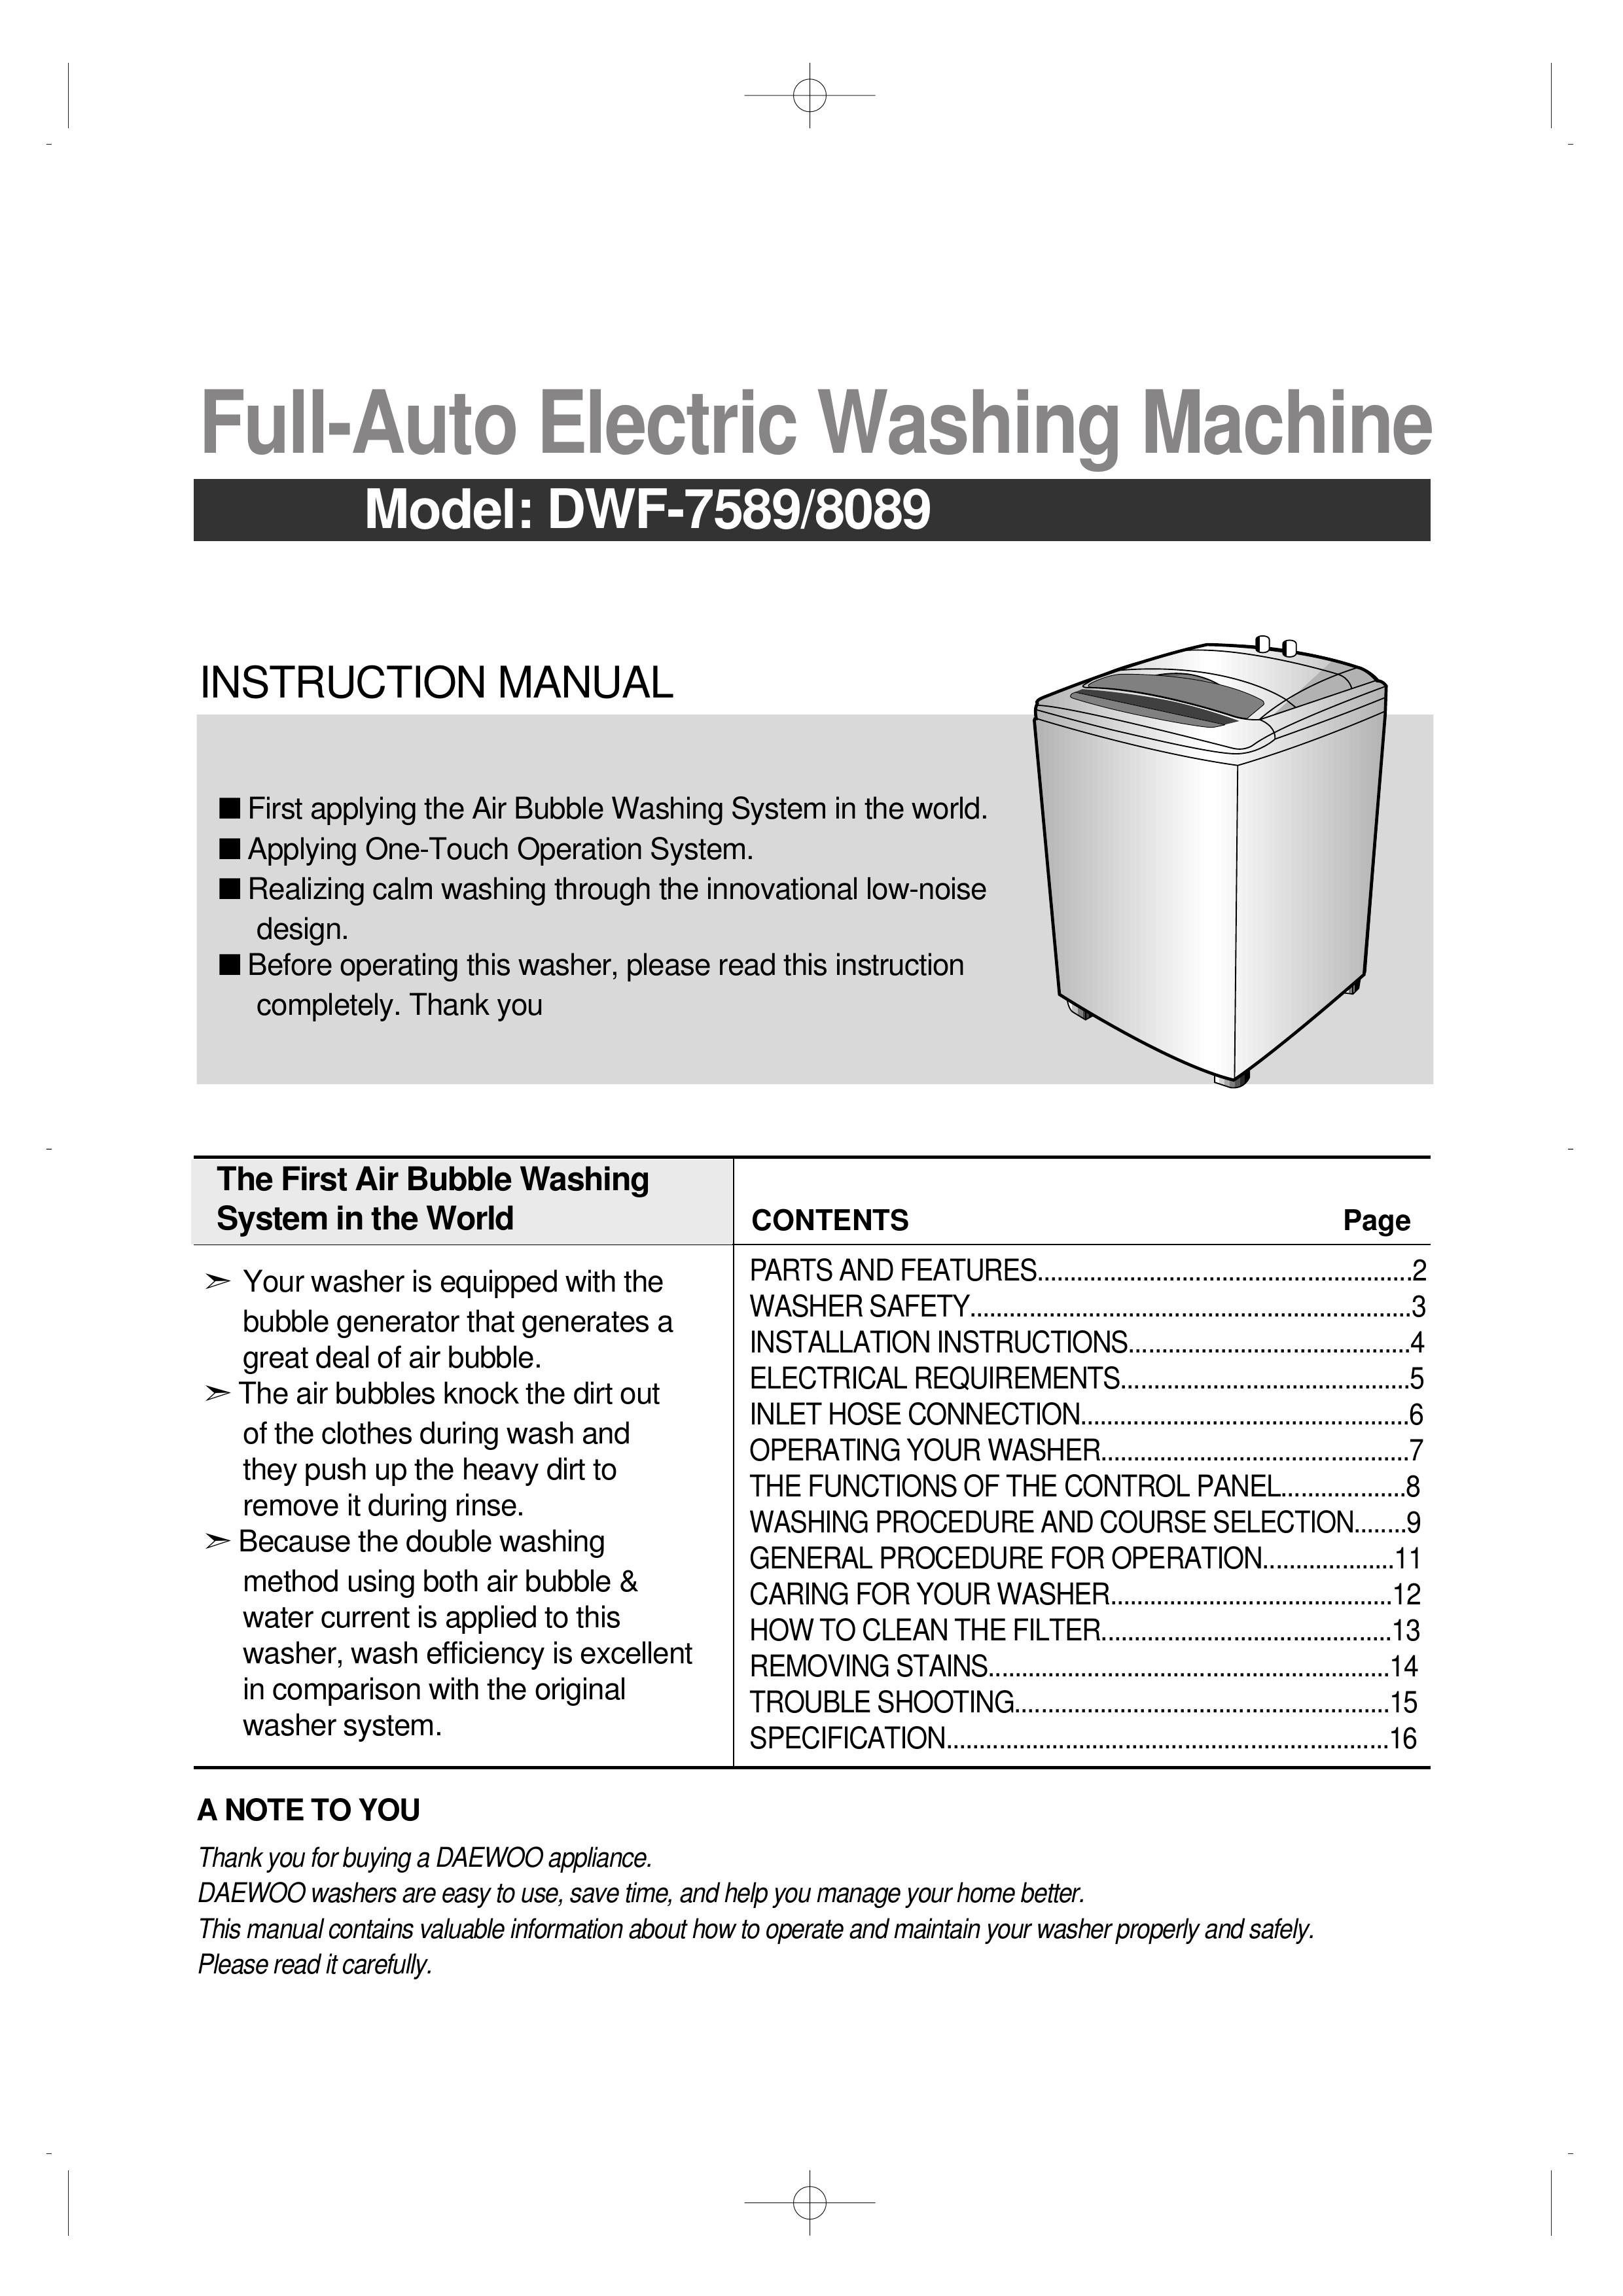 Husqvarna DWF-7589 Washer User Manual